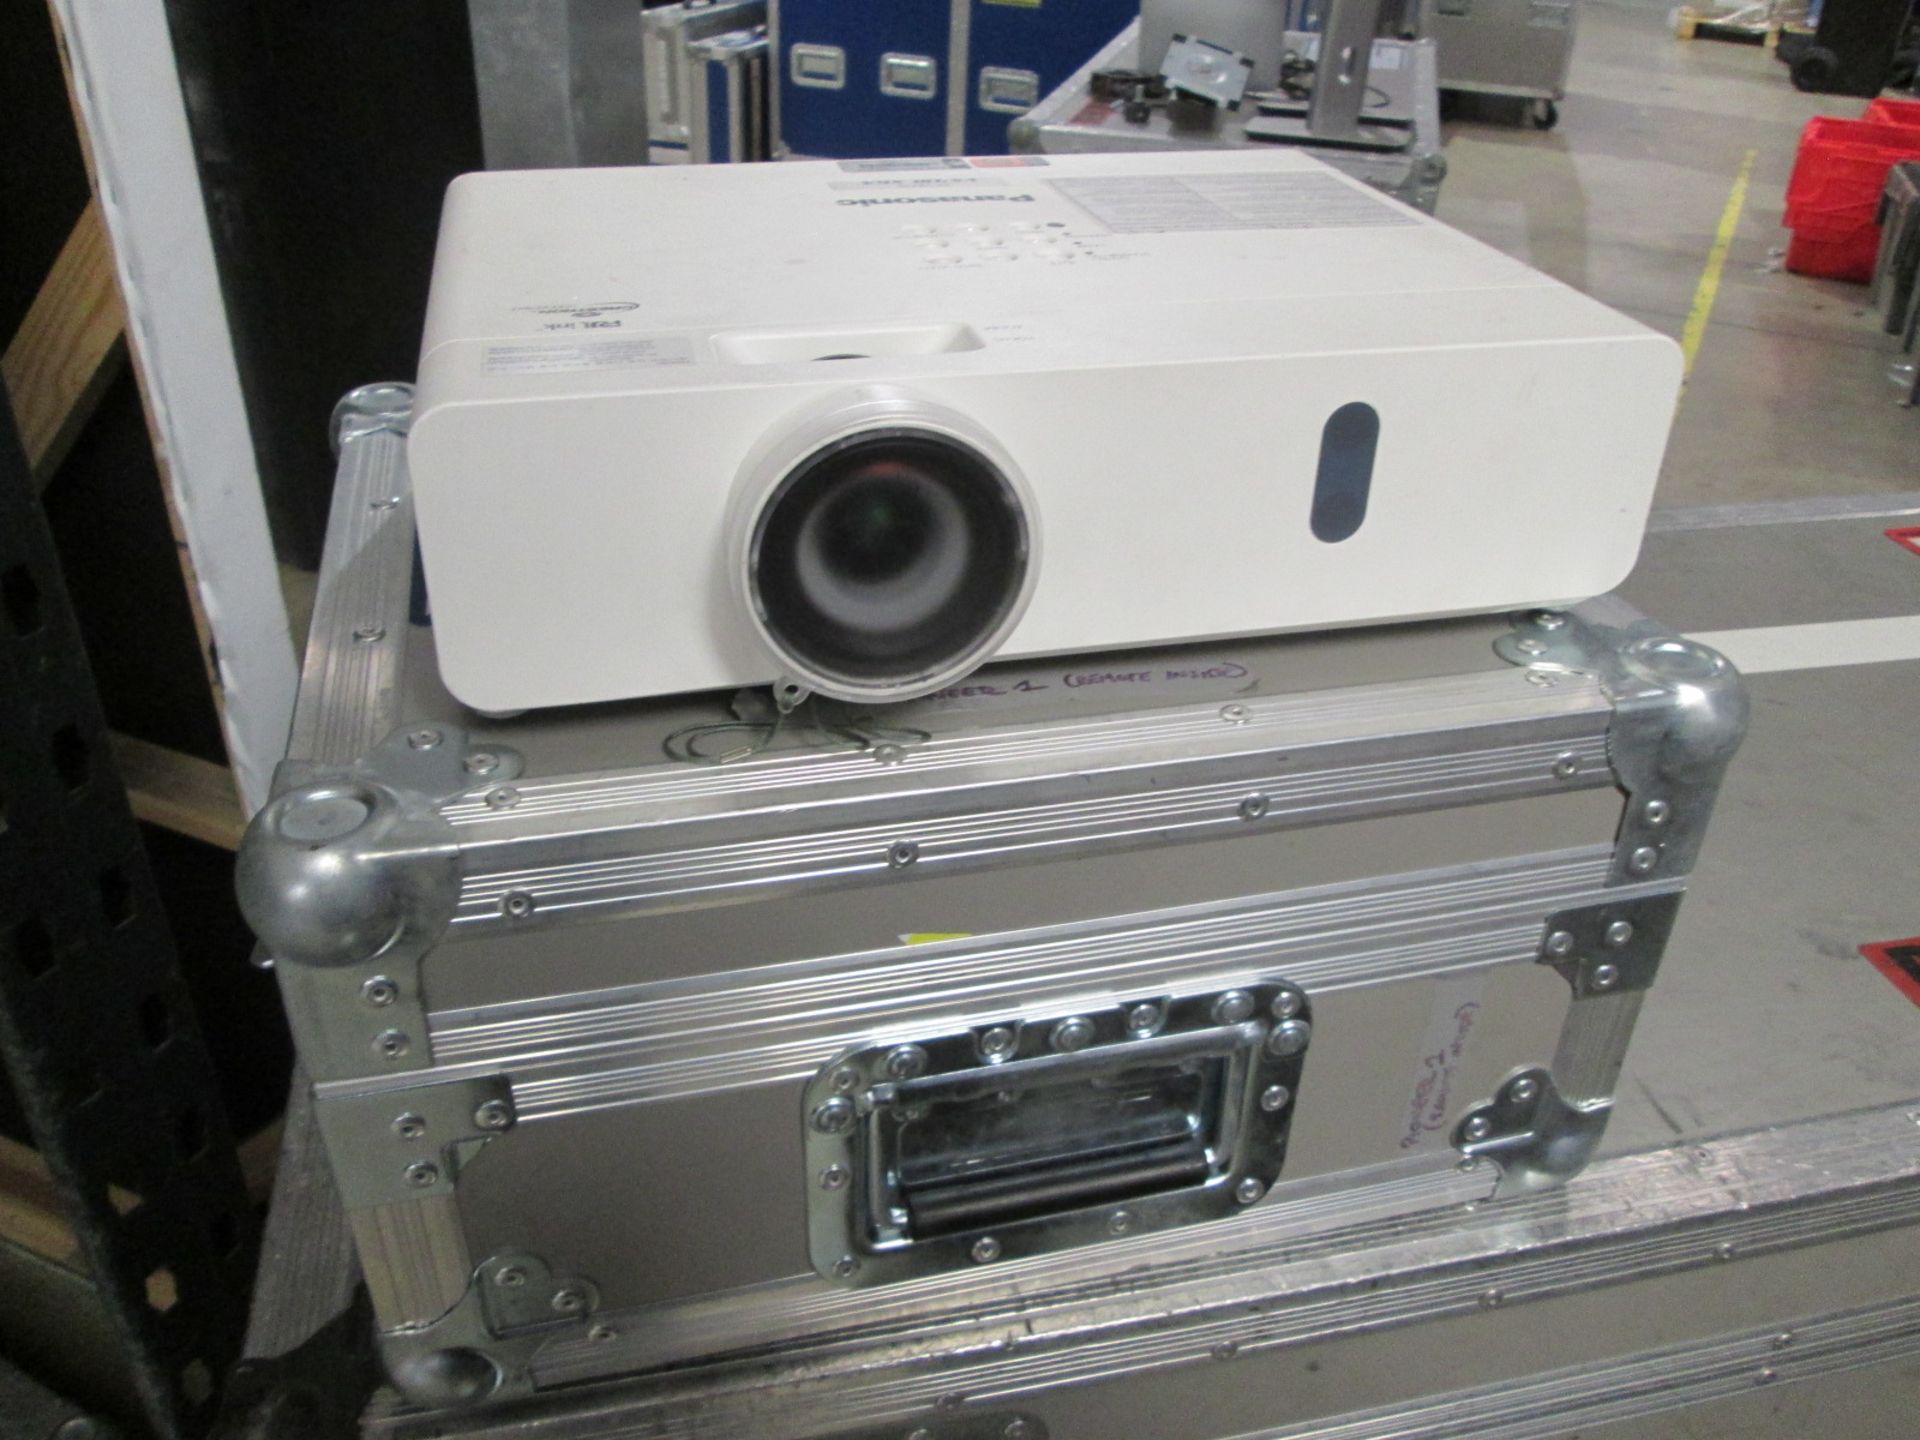 Panasonic PT-VX410Z LCD Projector, S/N DC4640048, YOM 2014, In flight case